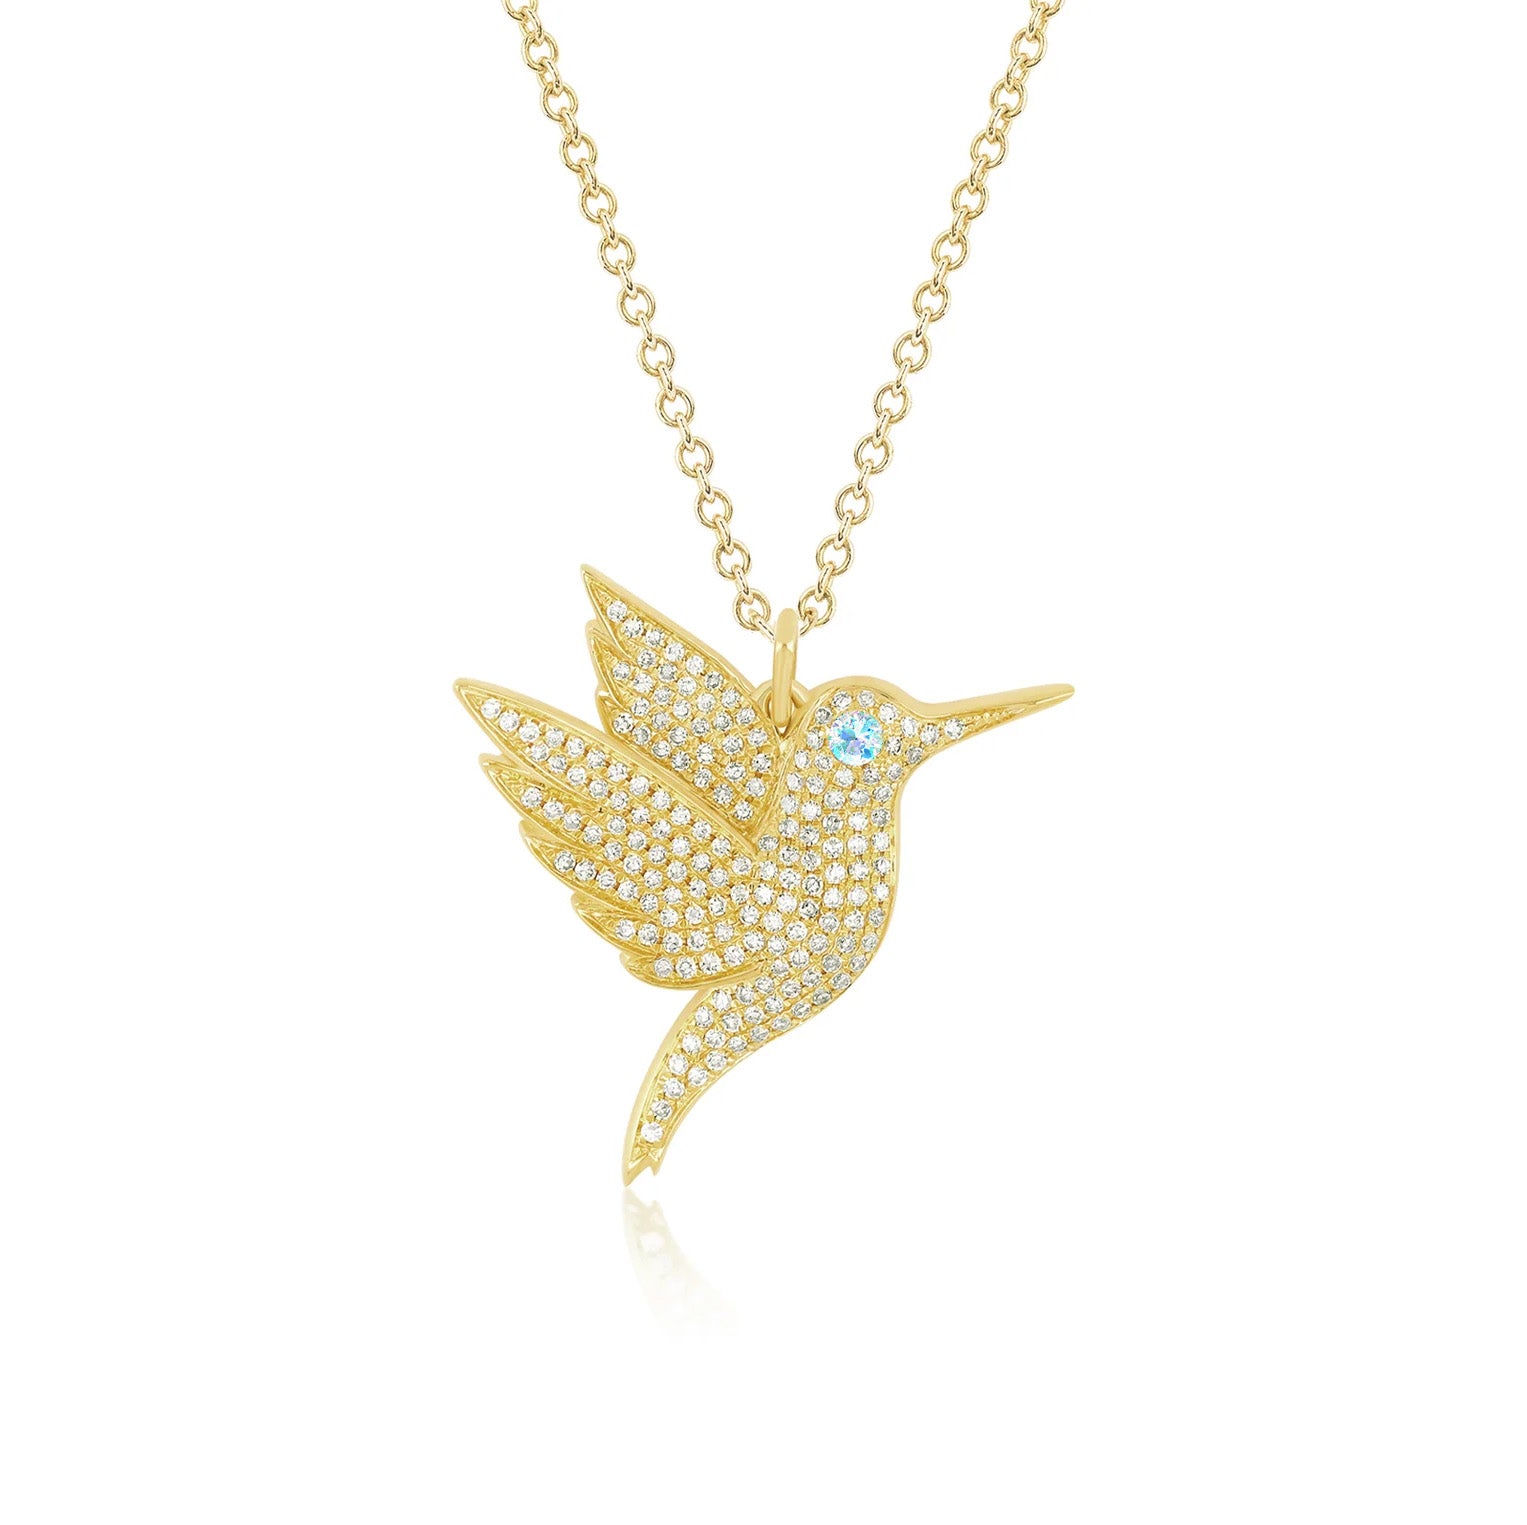 Pavé Diamond Hummingbird Necklace in 14k yellow gold with aquamarine birthstone eye